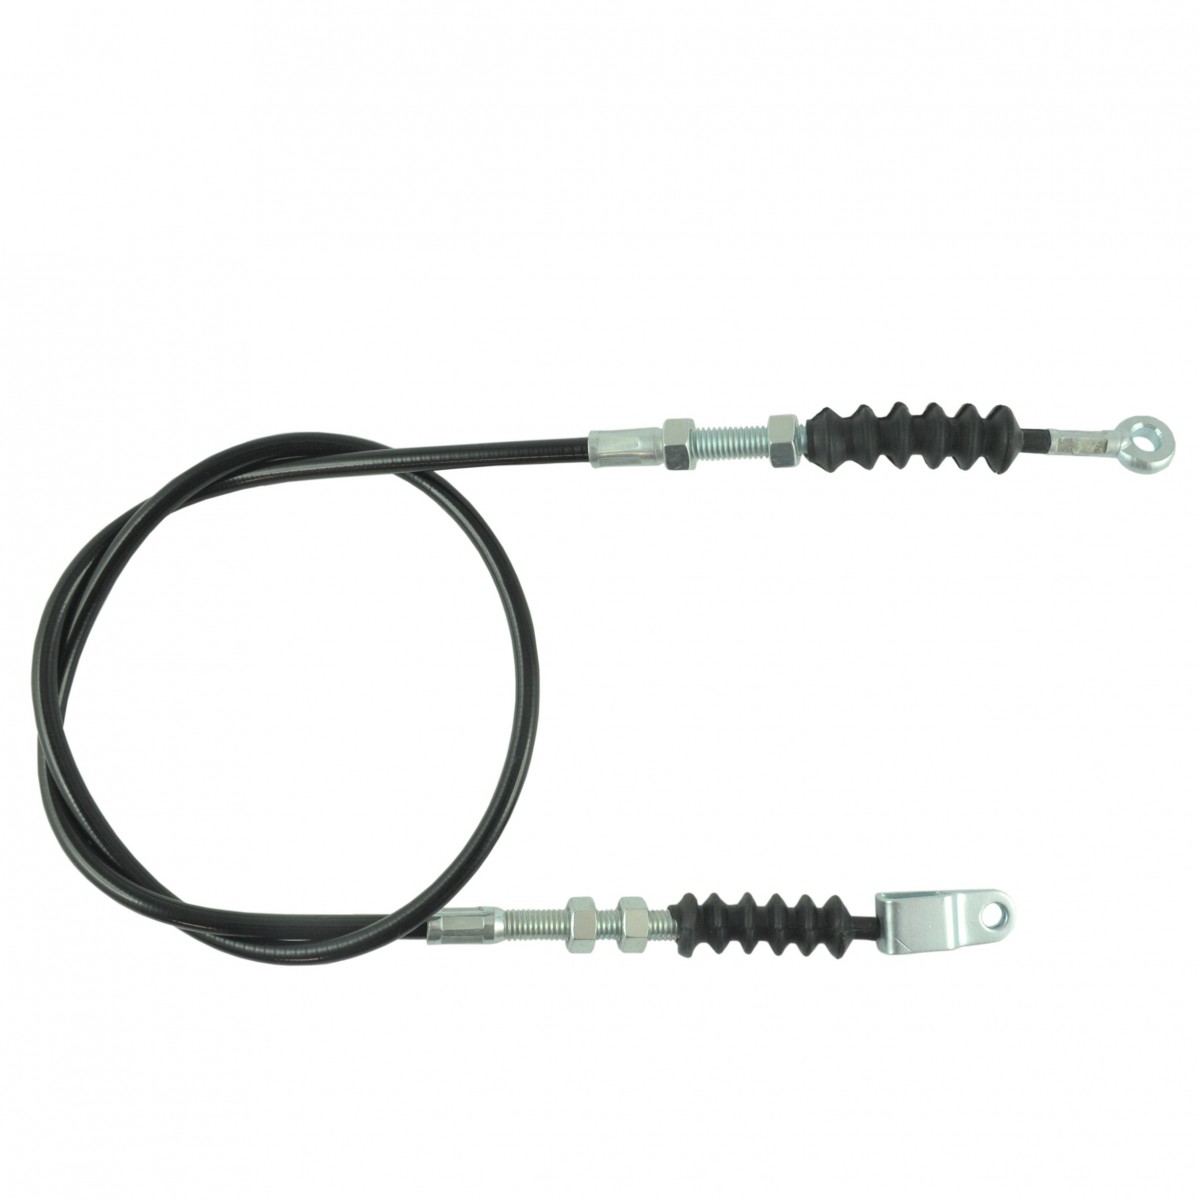 PTO shaft clutch cable 930 mm, Kubota M8540, M9540